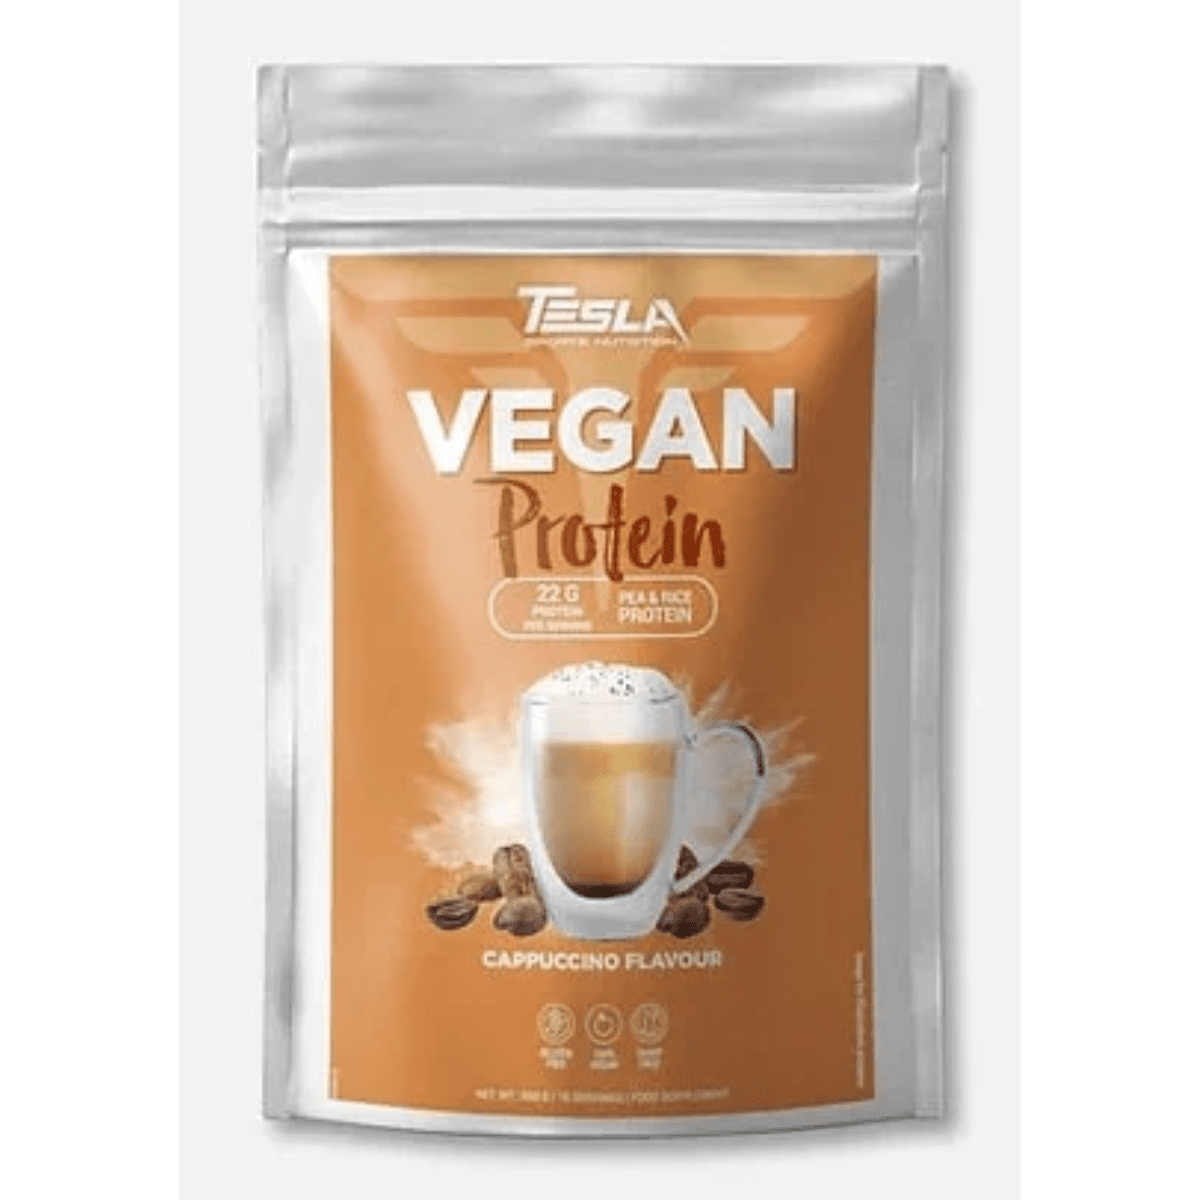 Tesla Vegan Protein